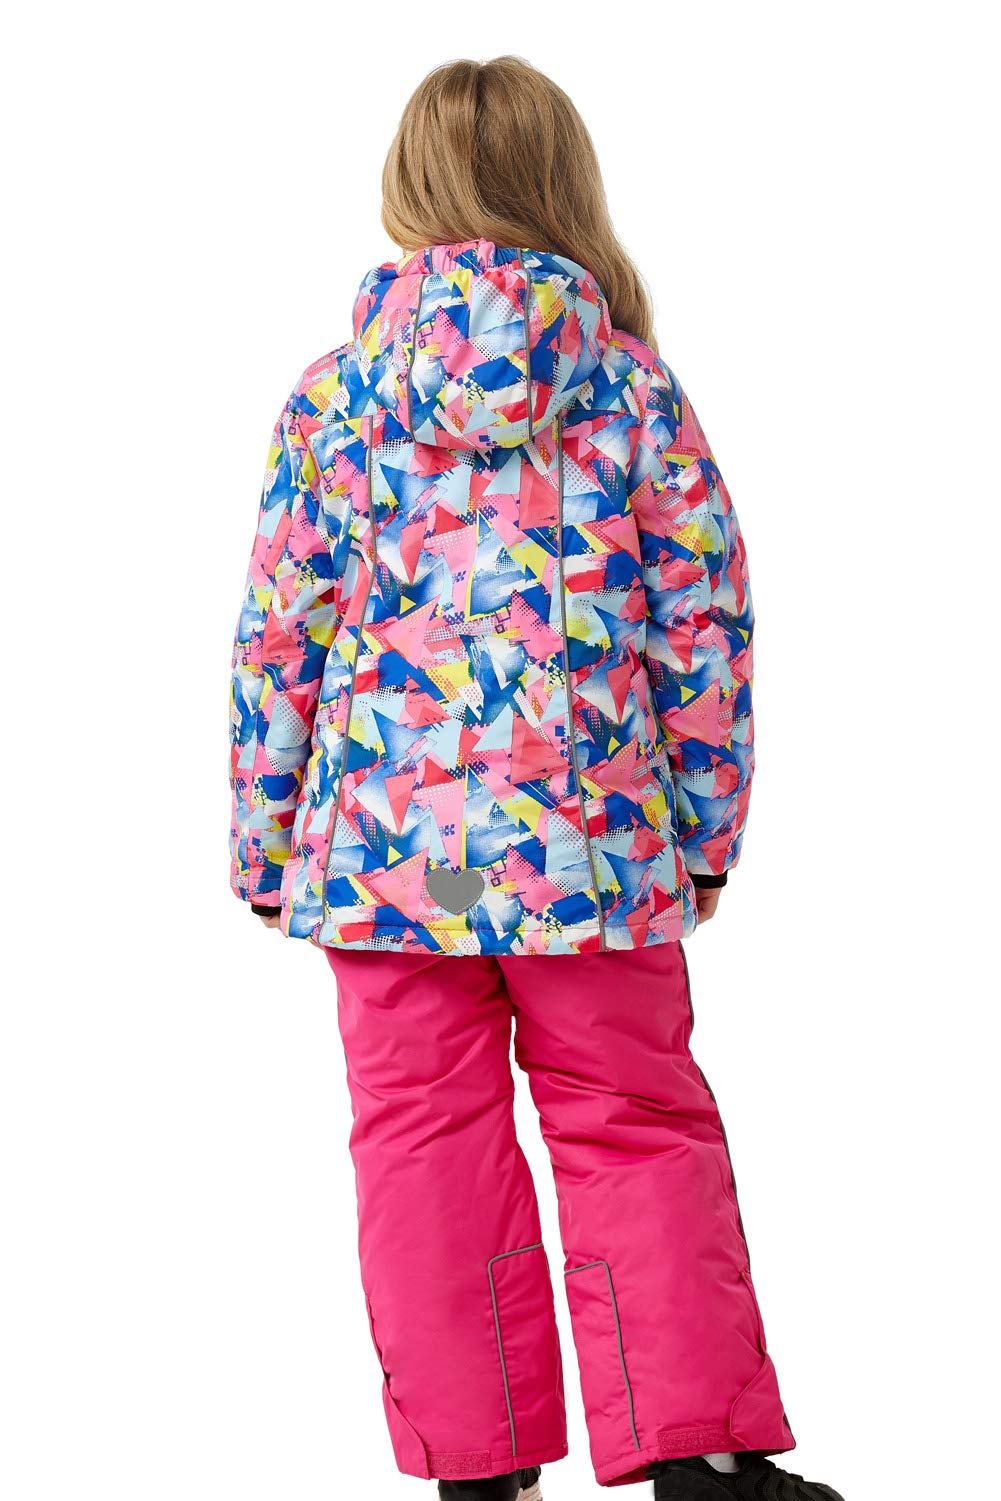 M2C Girls Thicken Warm Hooded Color Block Ski Snowsuit Jacket & Pants Pink 6/7